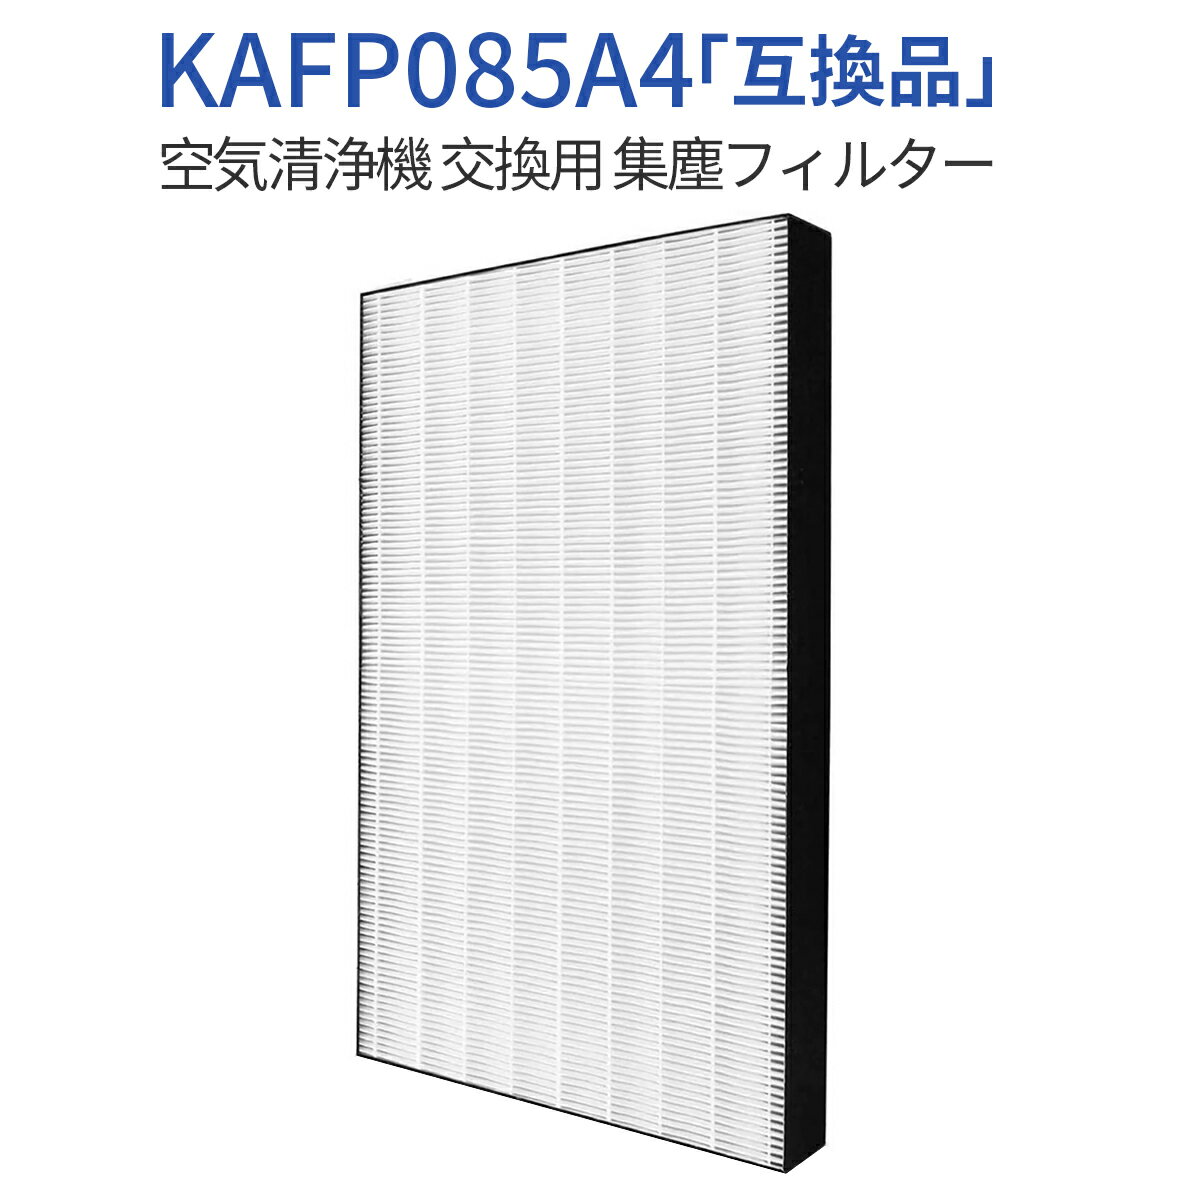 KAFP085A4 集塵フィルター ダイキン 空気清浄機 フィルター kafp085a4 交換用 HEPA集じんフィルター (1枚入り) 純正品ではなく互換品です